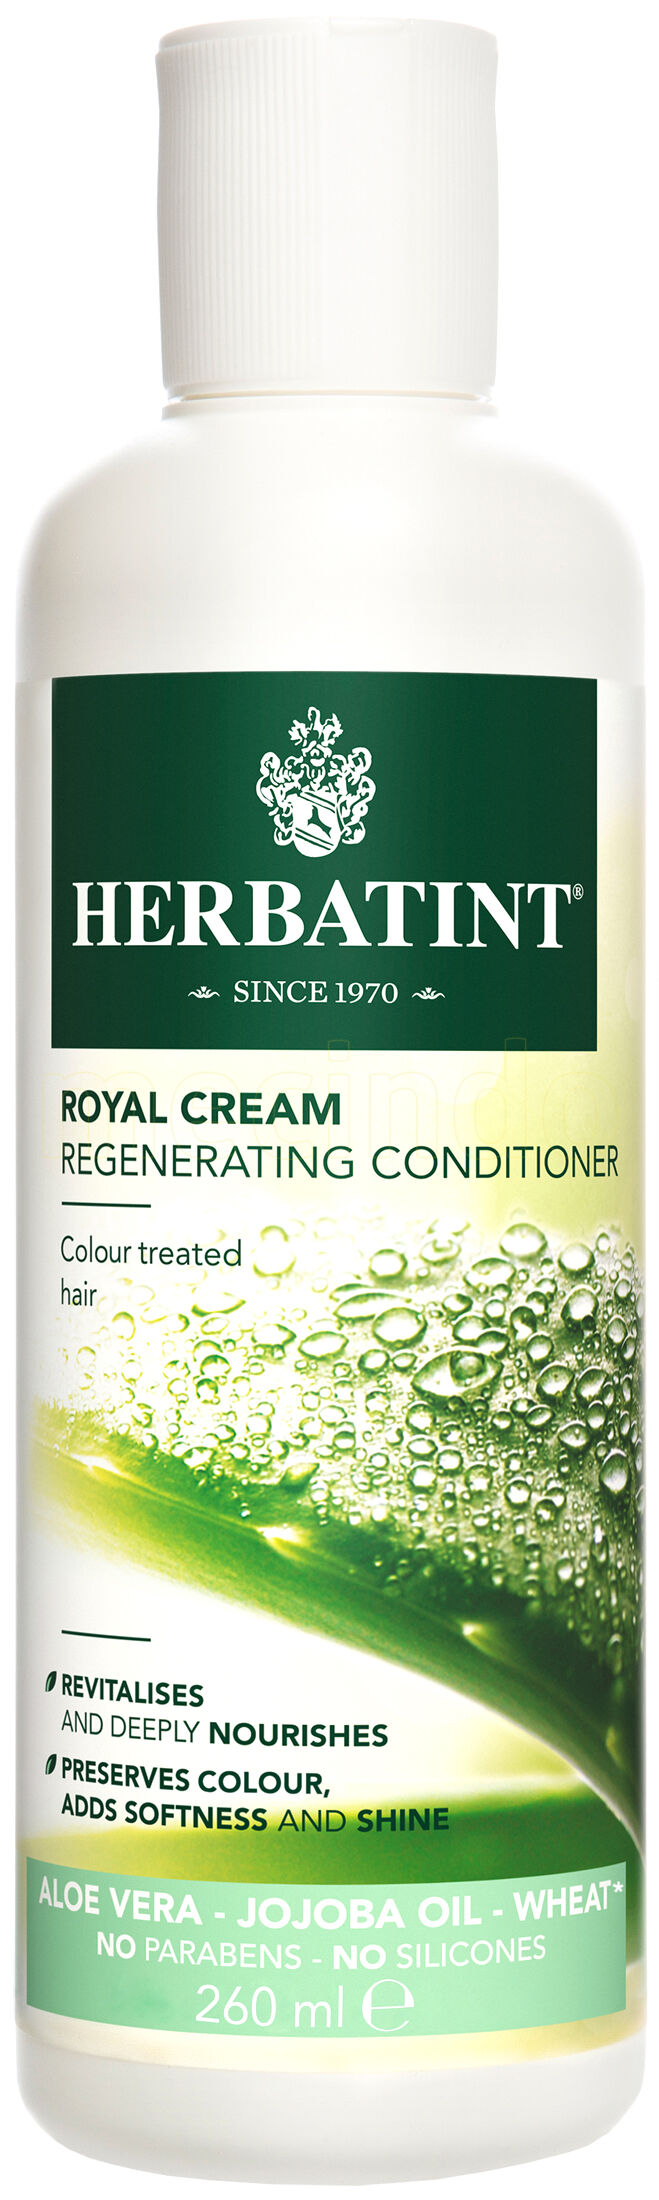 Herbatint Royale Cream, Balsam - 260 ml